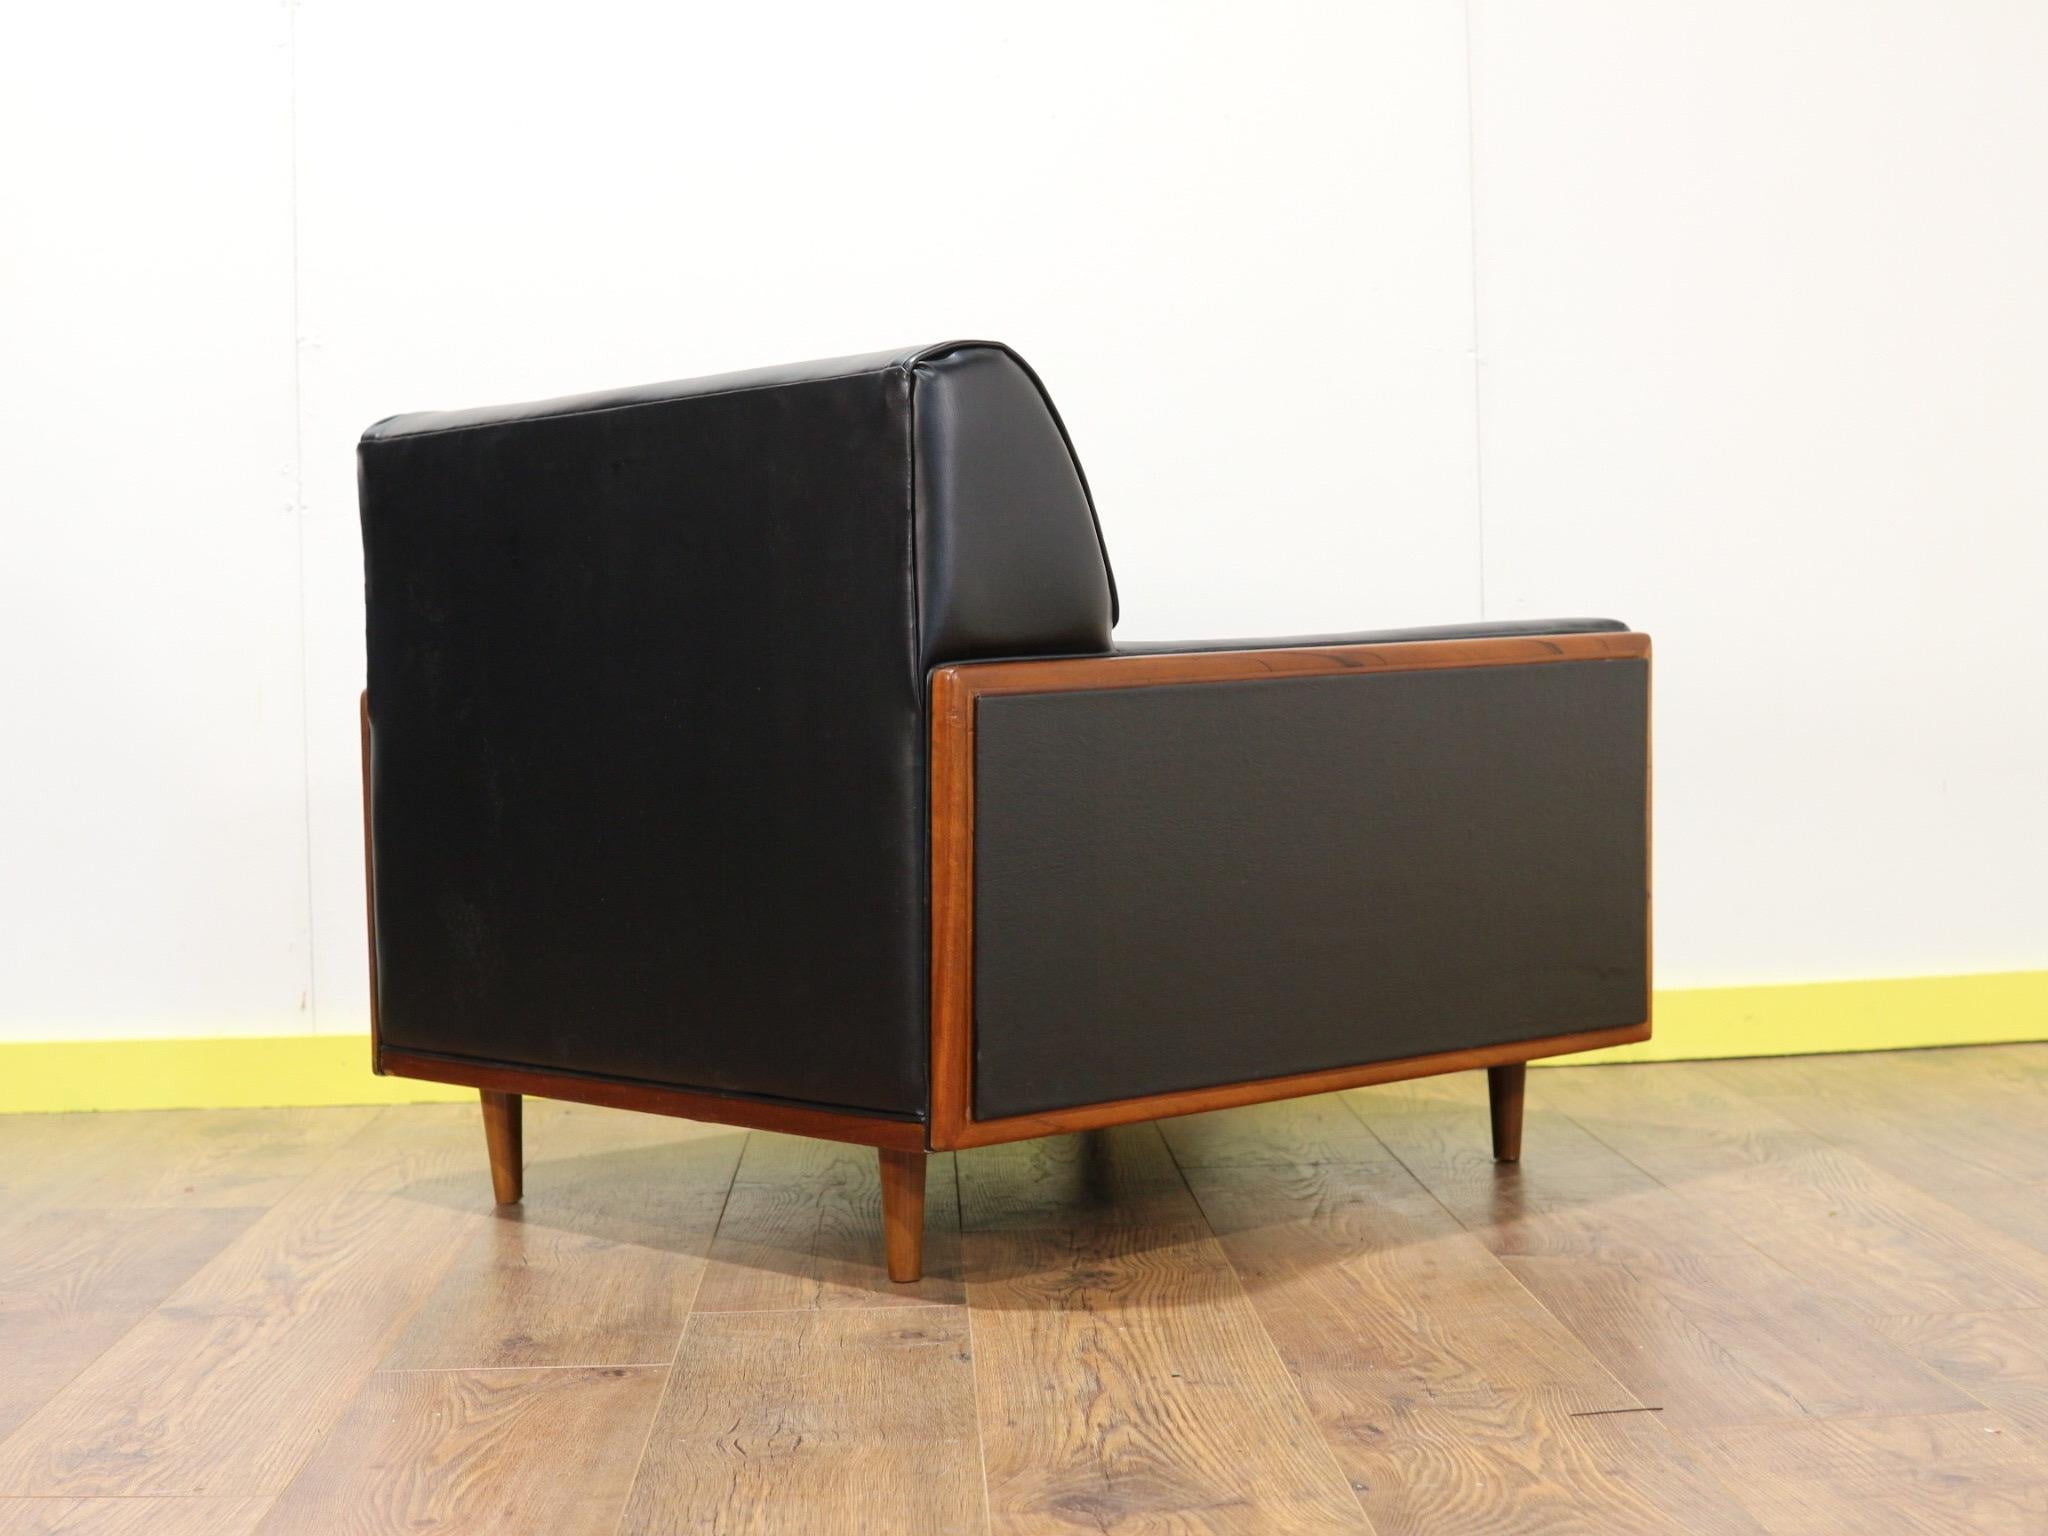 British Mid-Century Modern Vintage Lounge Chair By G Plan American Chair